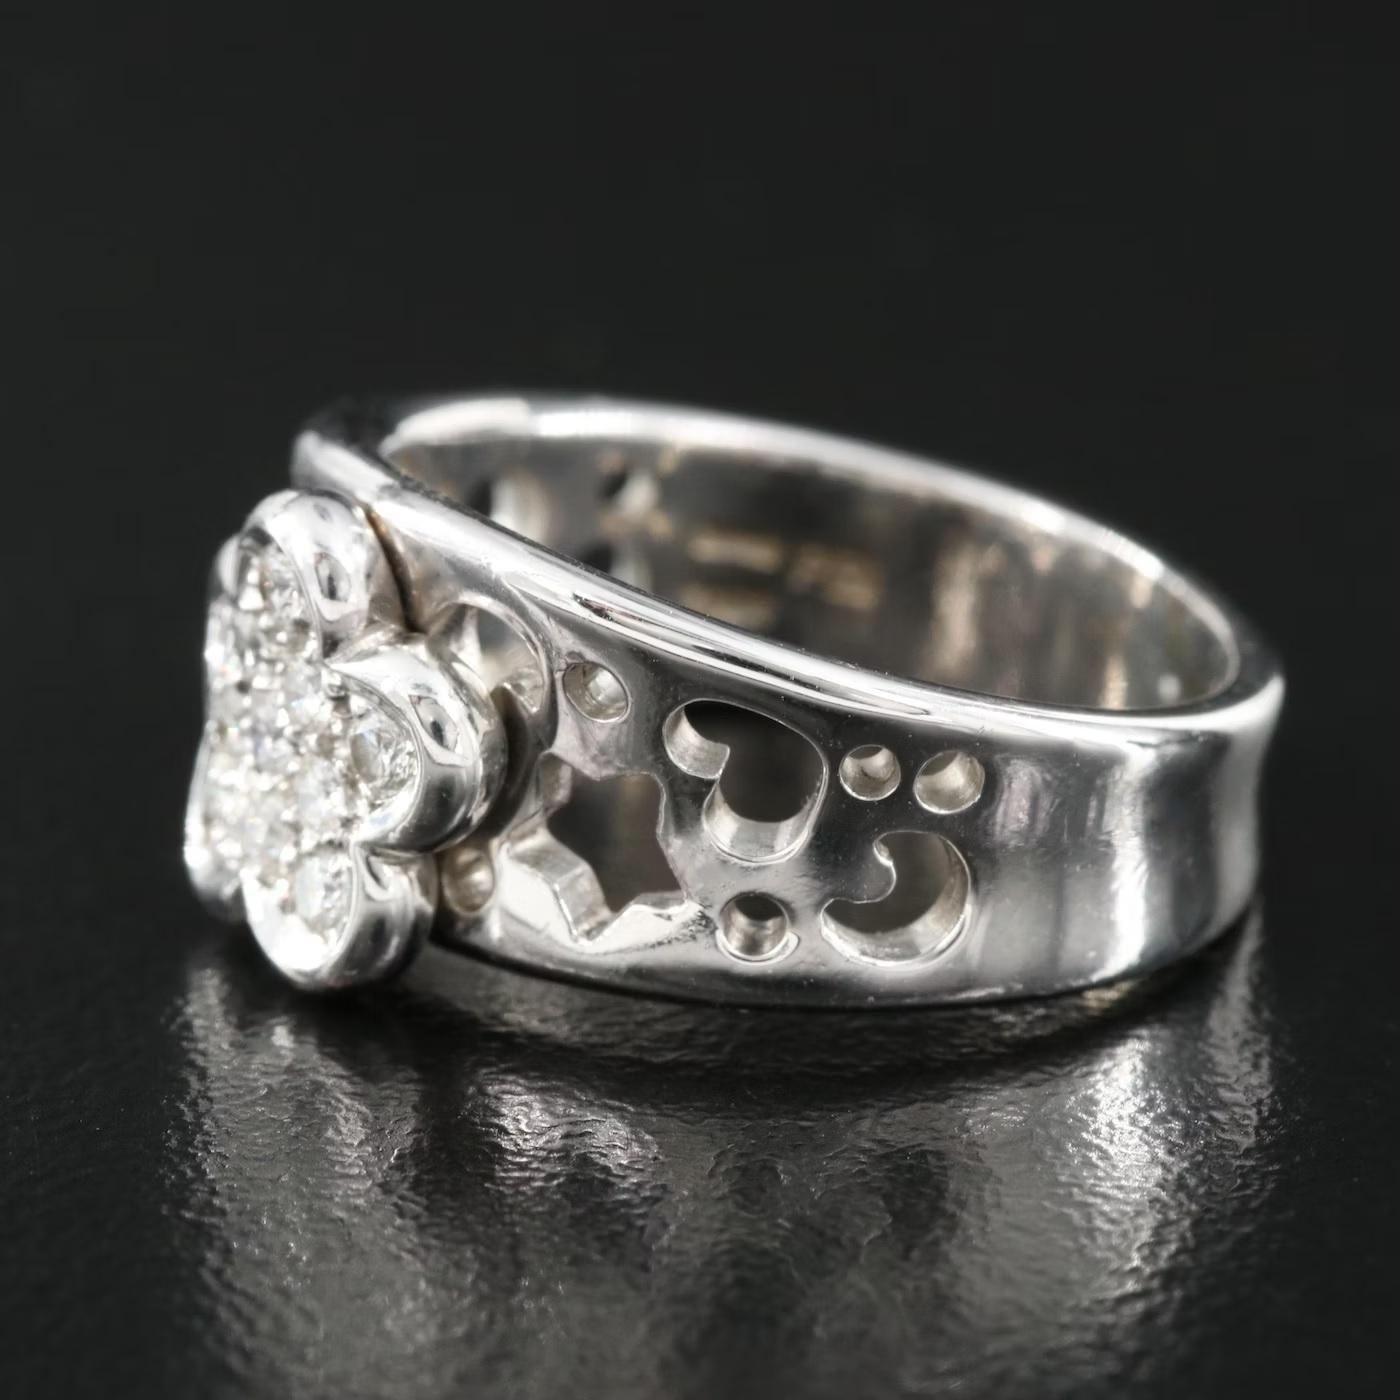 $9750 / NEW / PASQUALE BRUNI - ITALY designer Flower Diamond Ring / 18K Gold 2